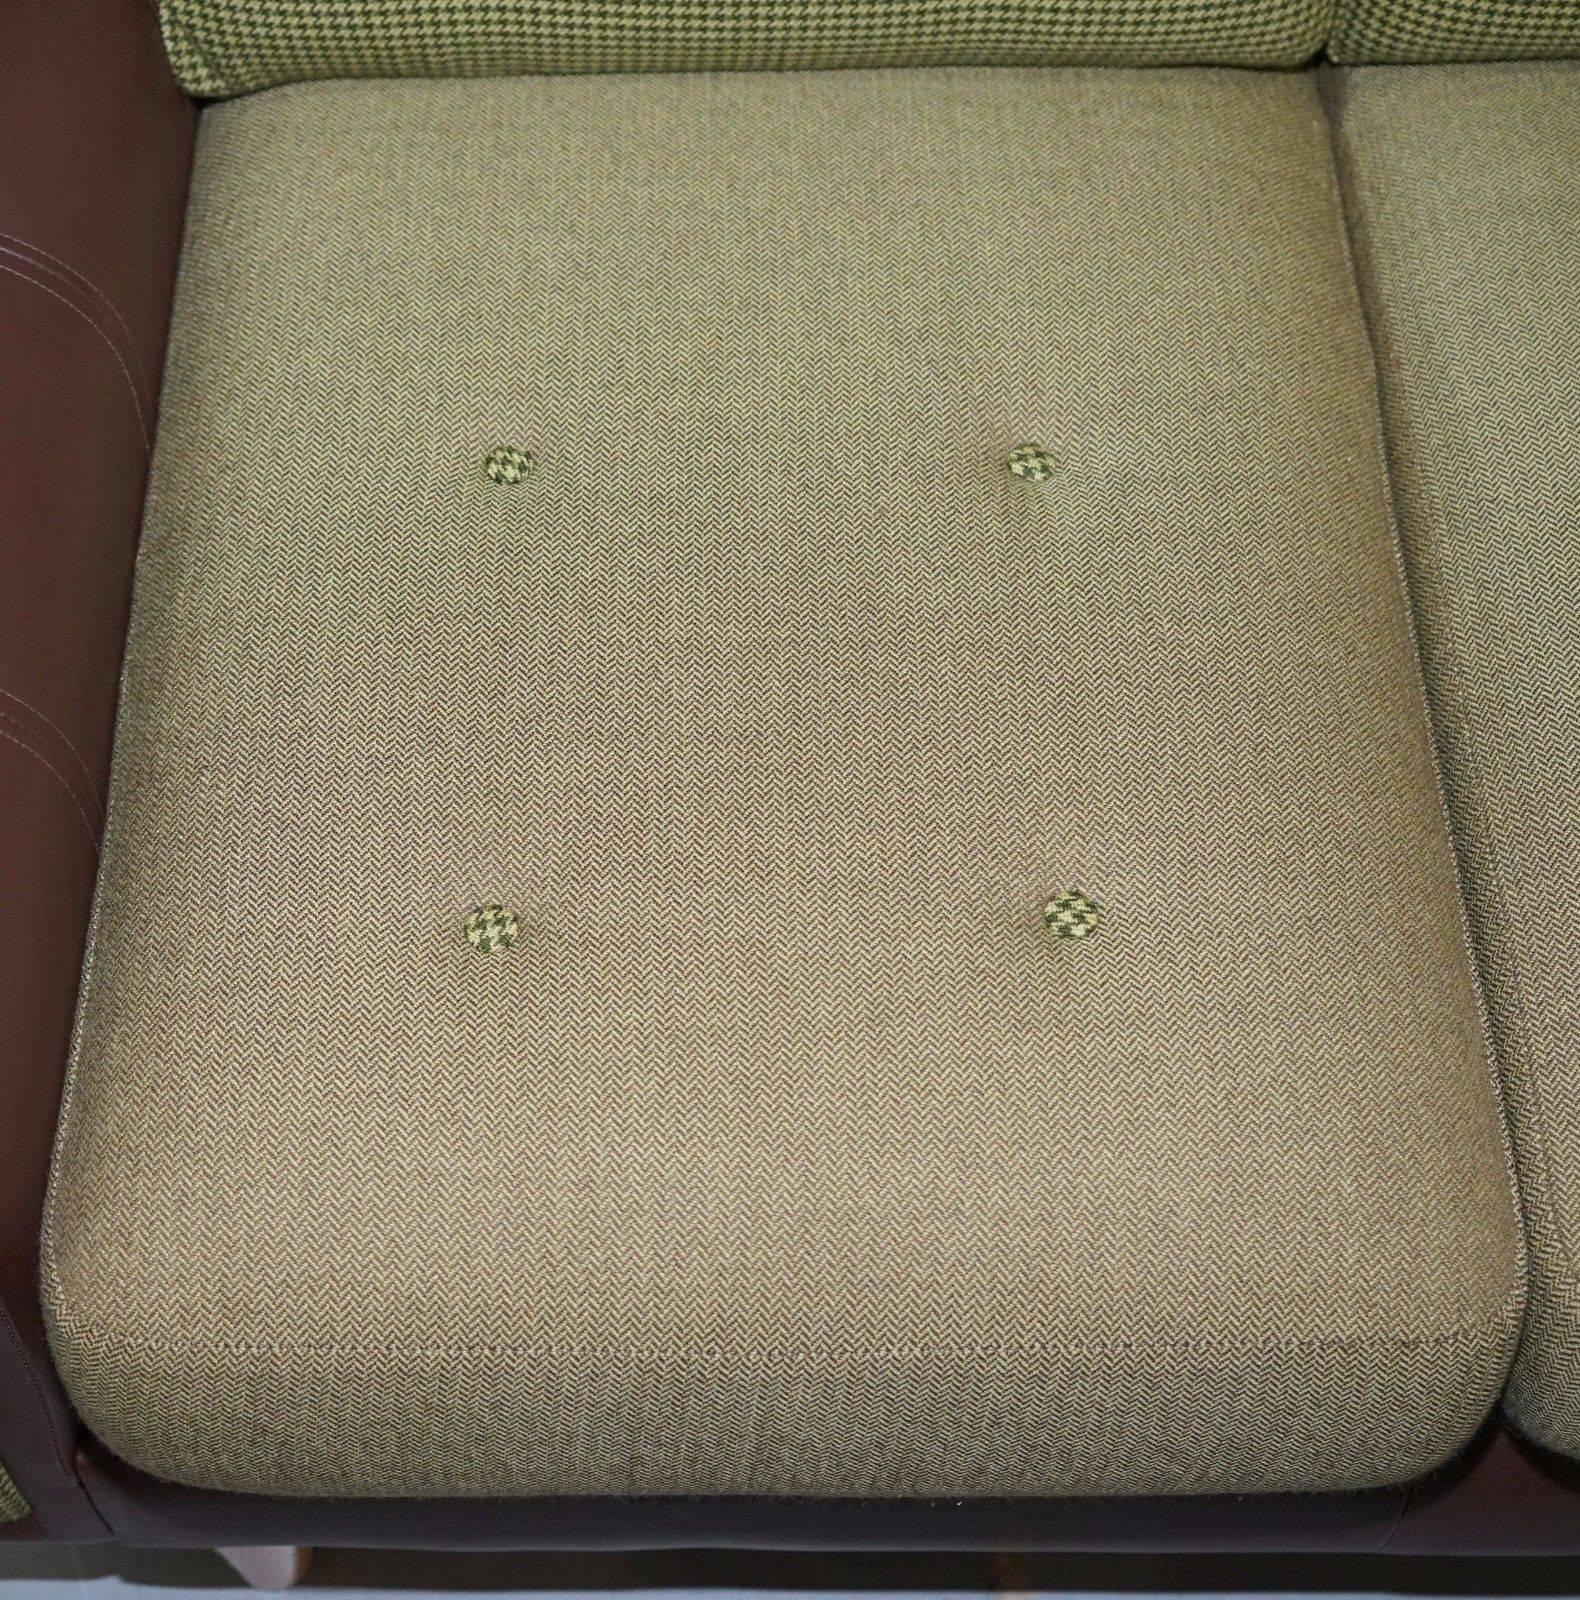 Mid-Century Modern Deadgood Harvey Three-Seat Brown Leather and Tweed Wool Sofa Rare Find